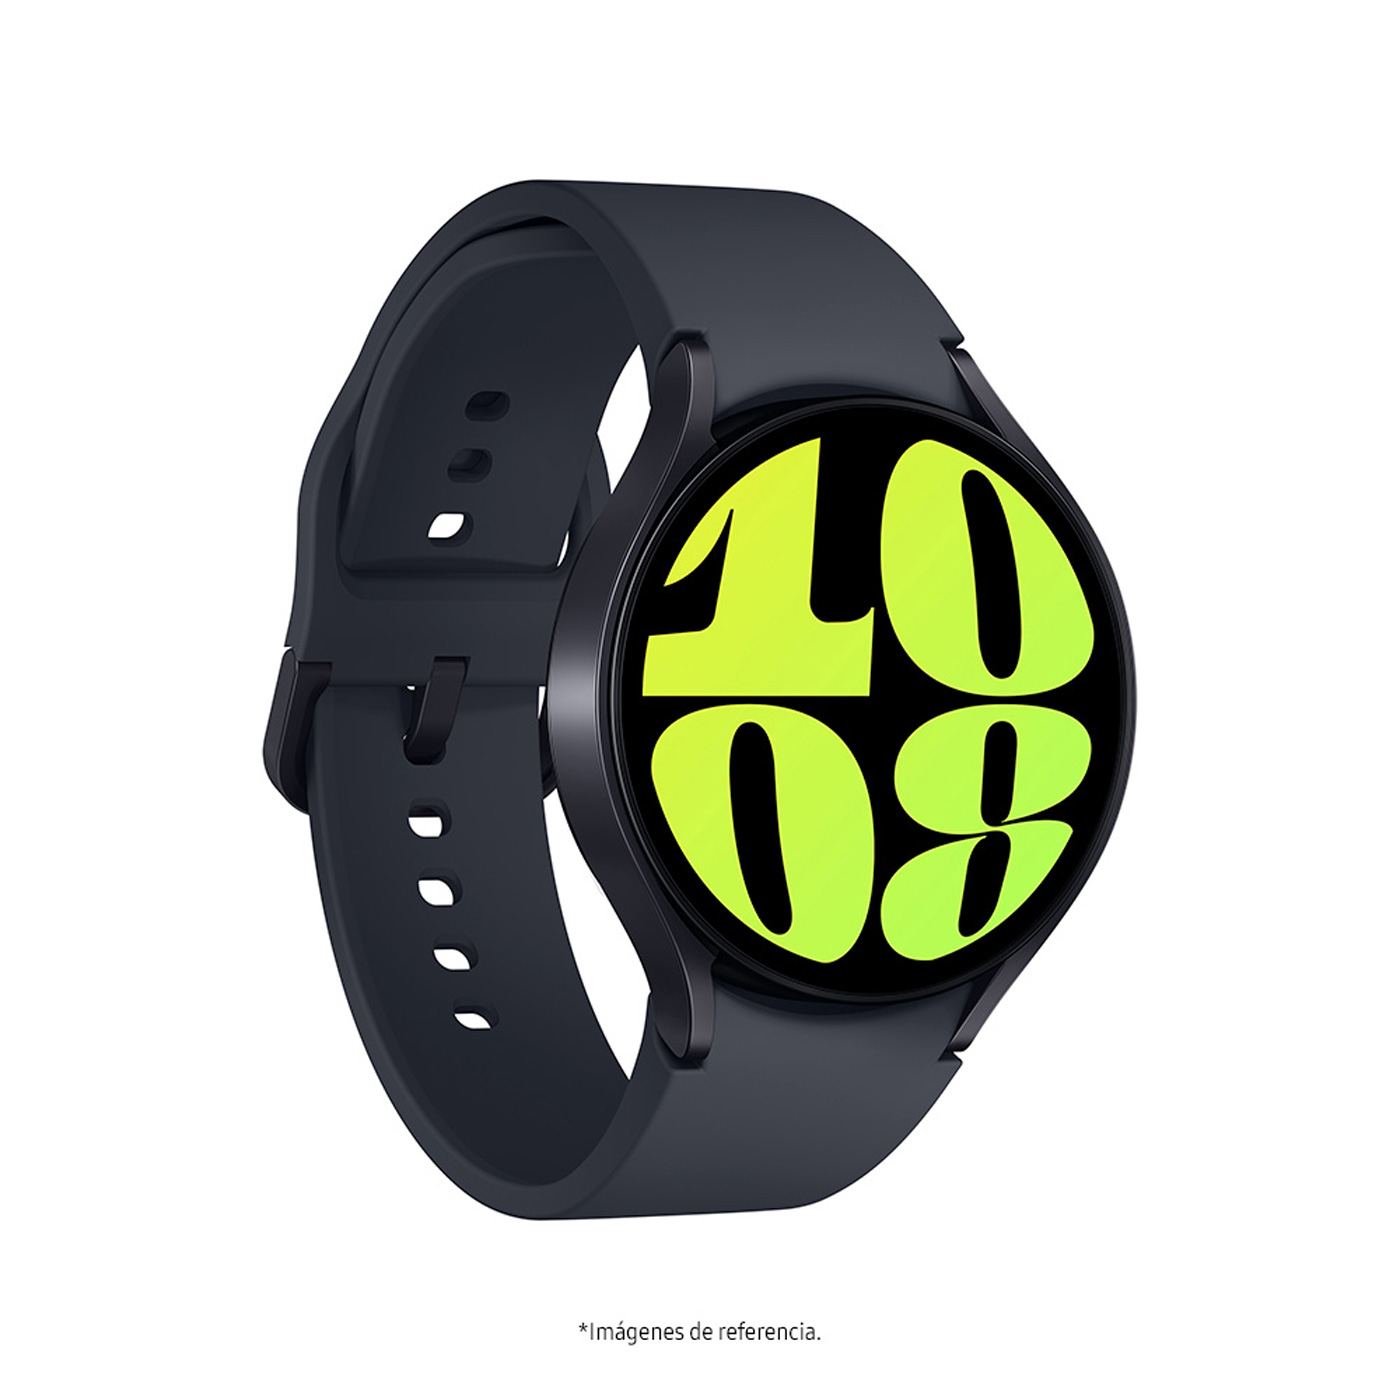 Samsung Galaxy Watch Series 6 – 44mm Aluminum Smartwatch - Black